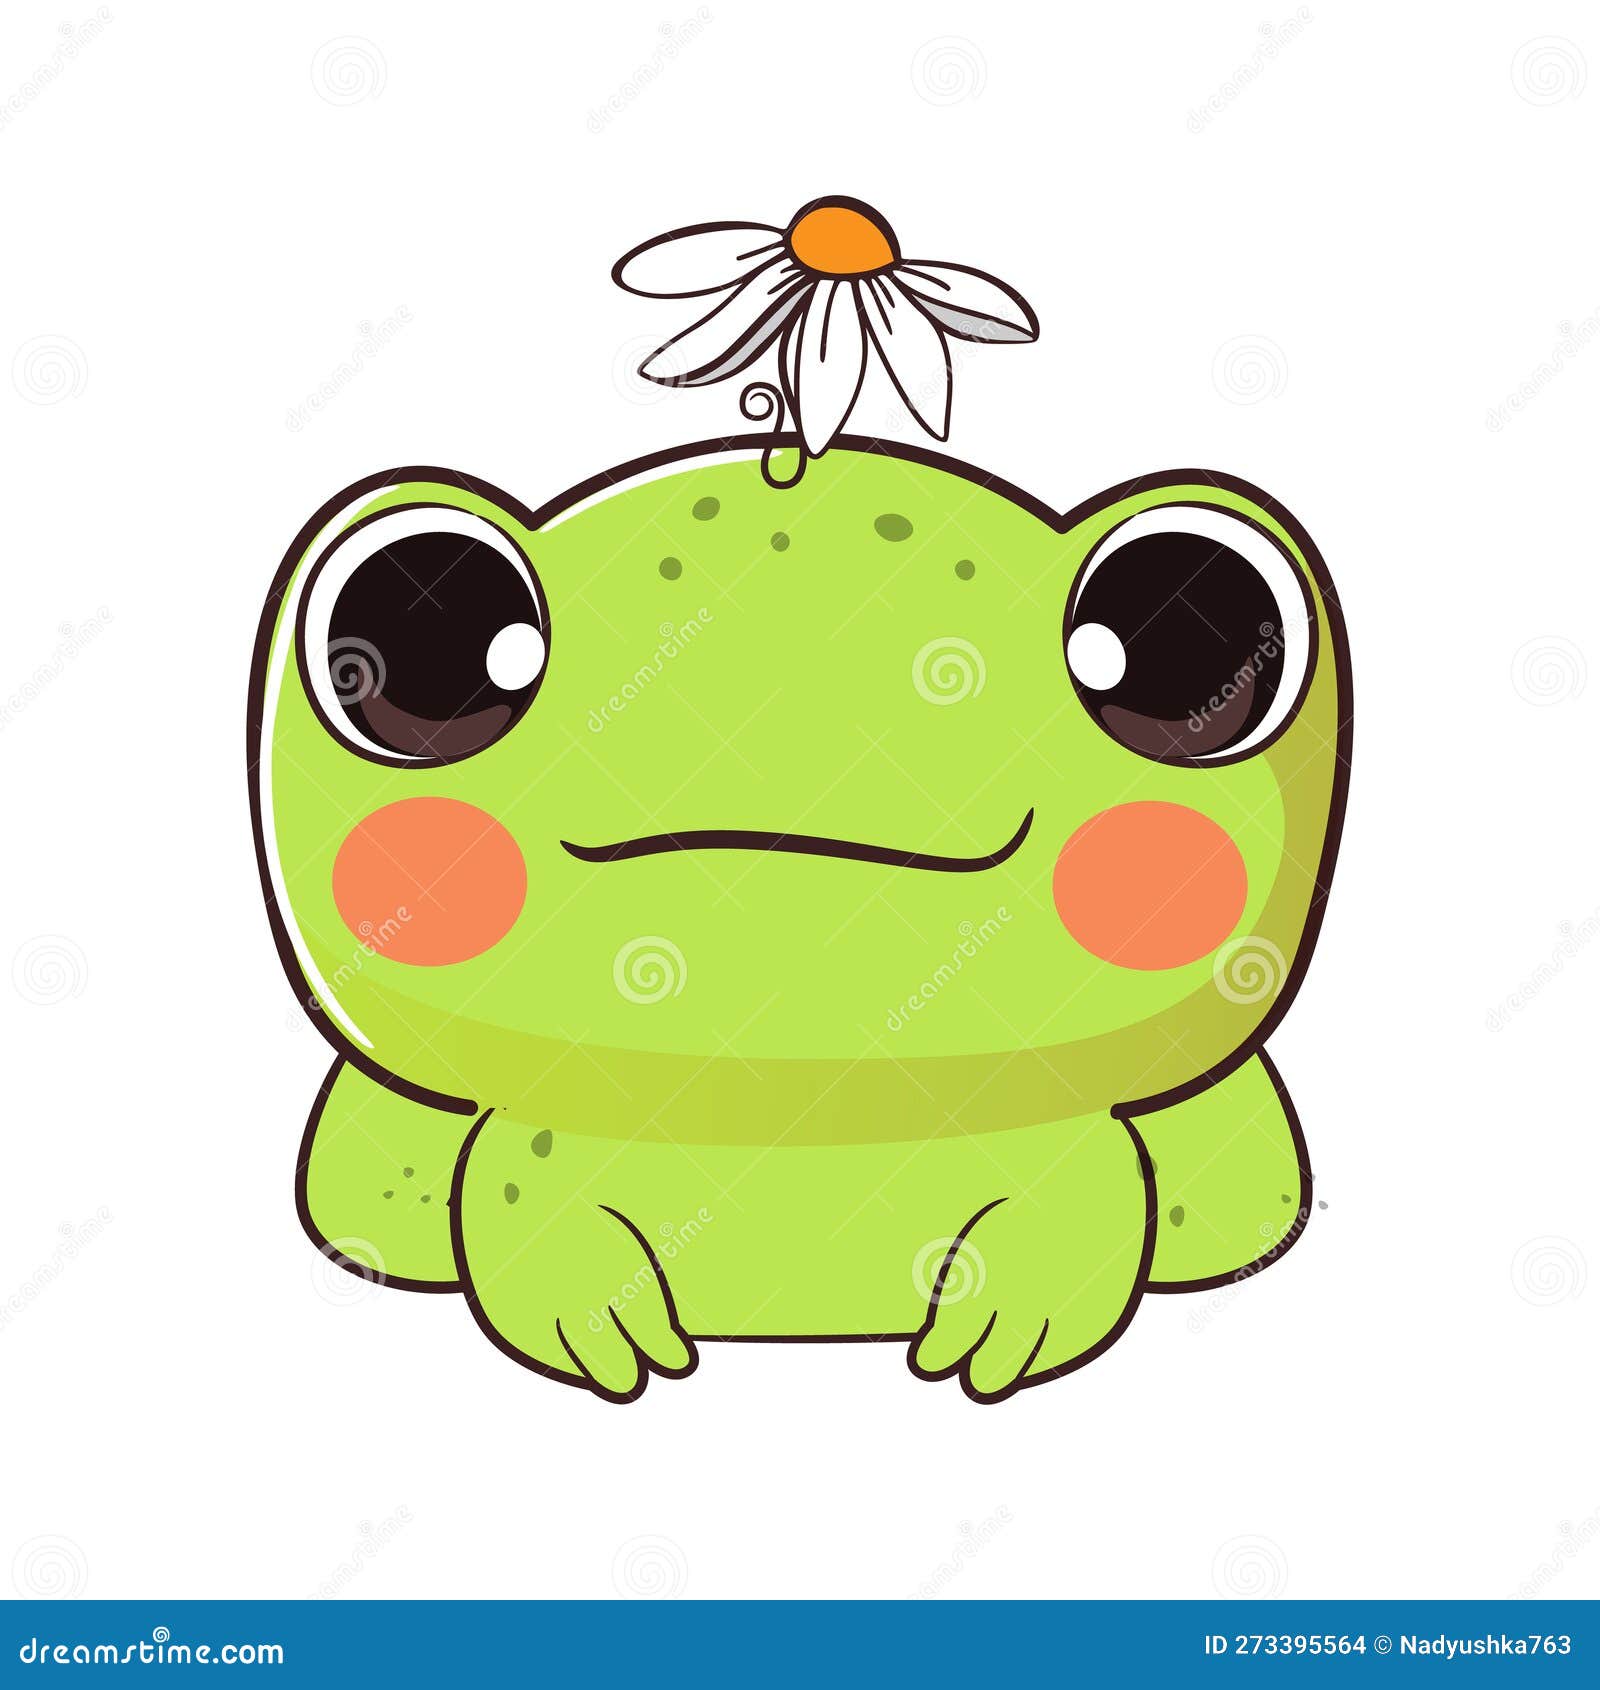 Cute Baby Frog in Cartoon Style. Vector Illustration. Stock Vector